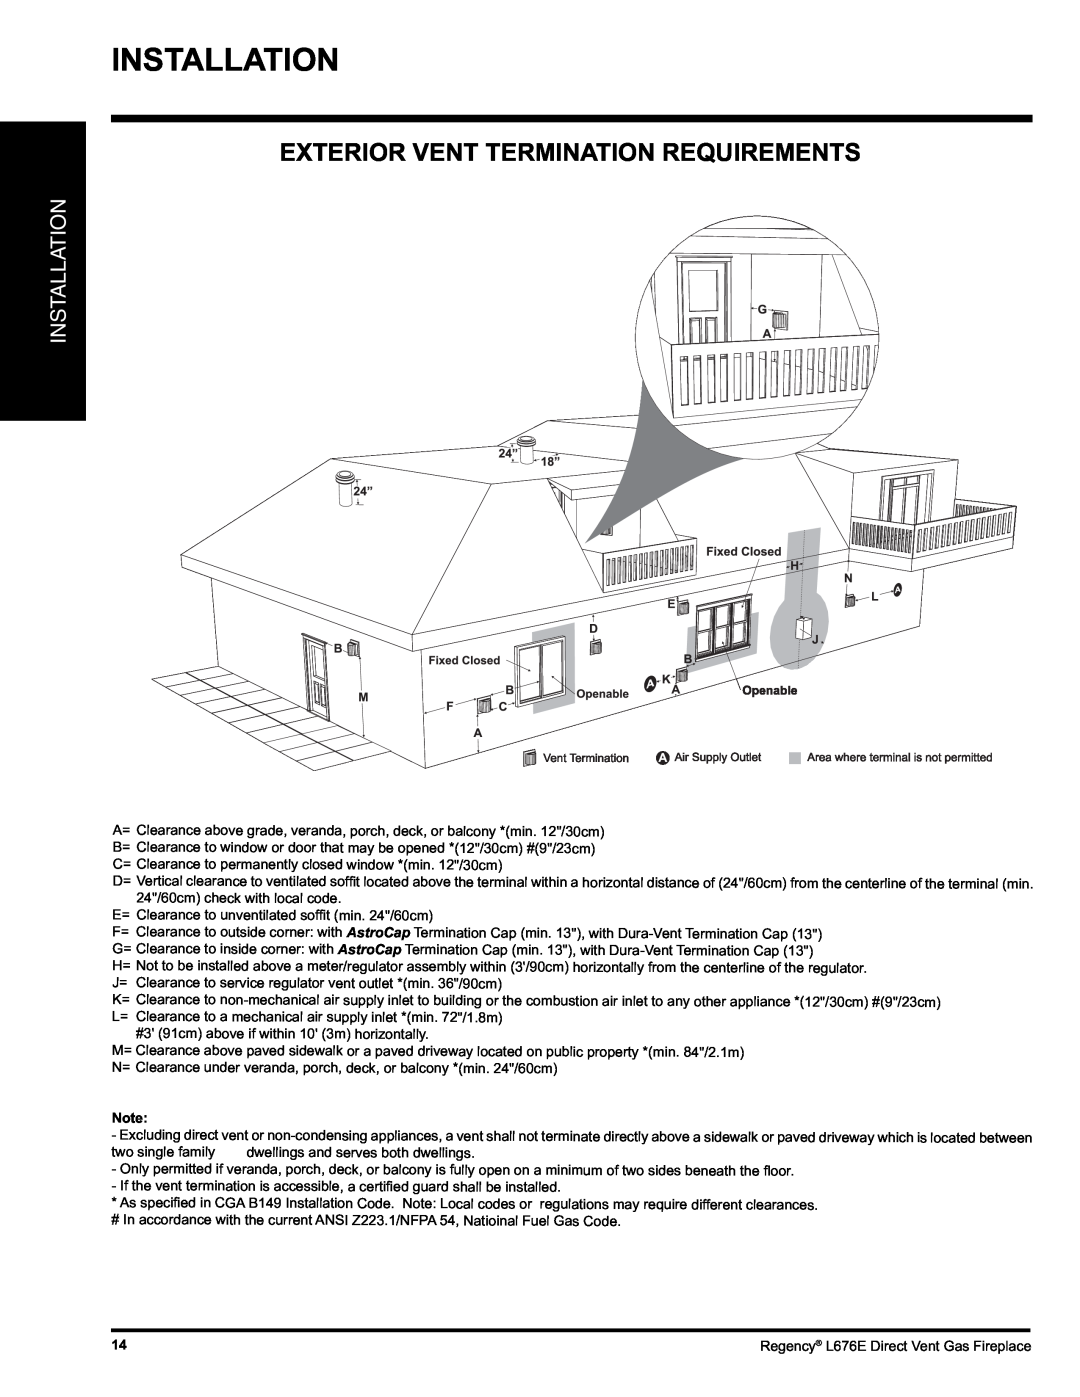 Regency L676E-LP, L676E-NG installation manual Installation, Exterior Vent Termination Requirements 